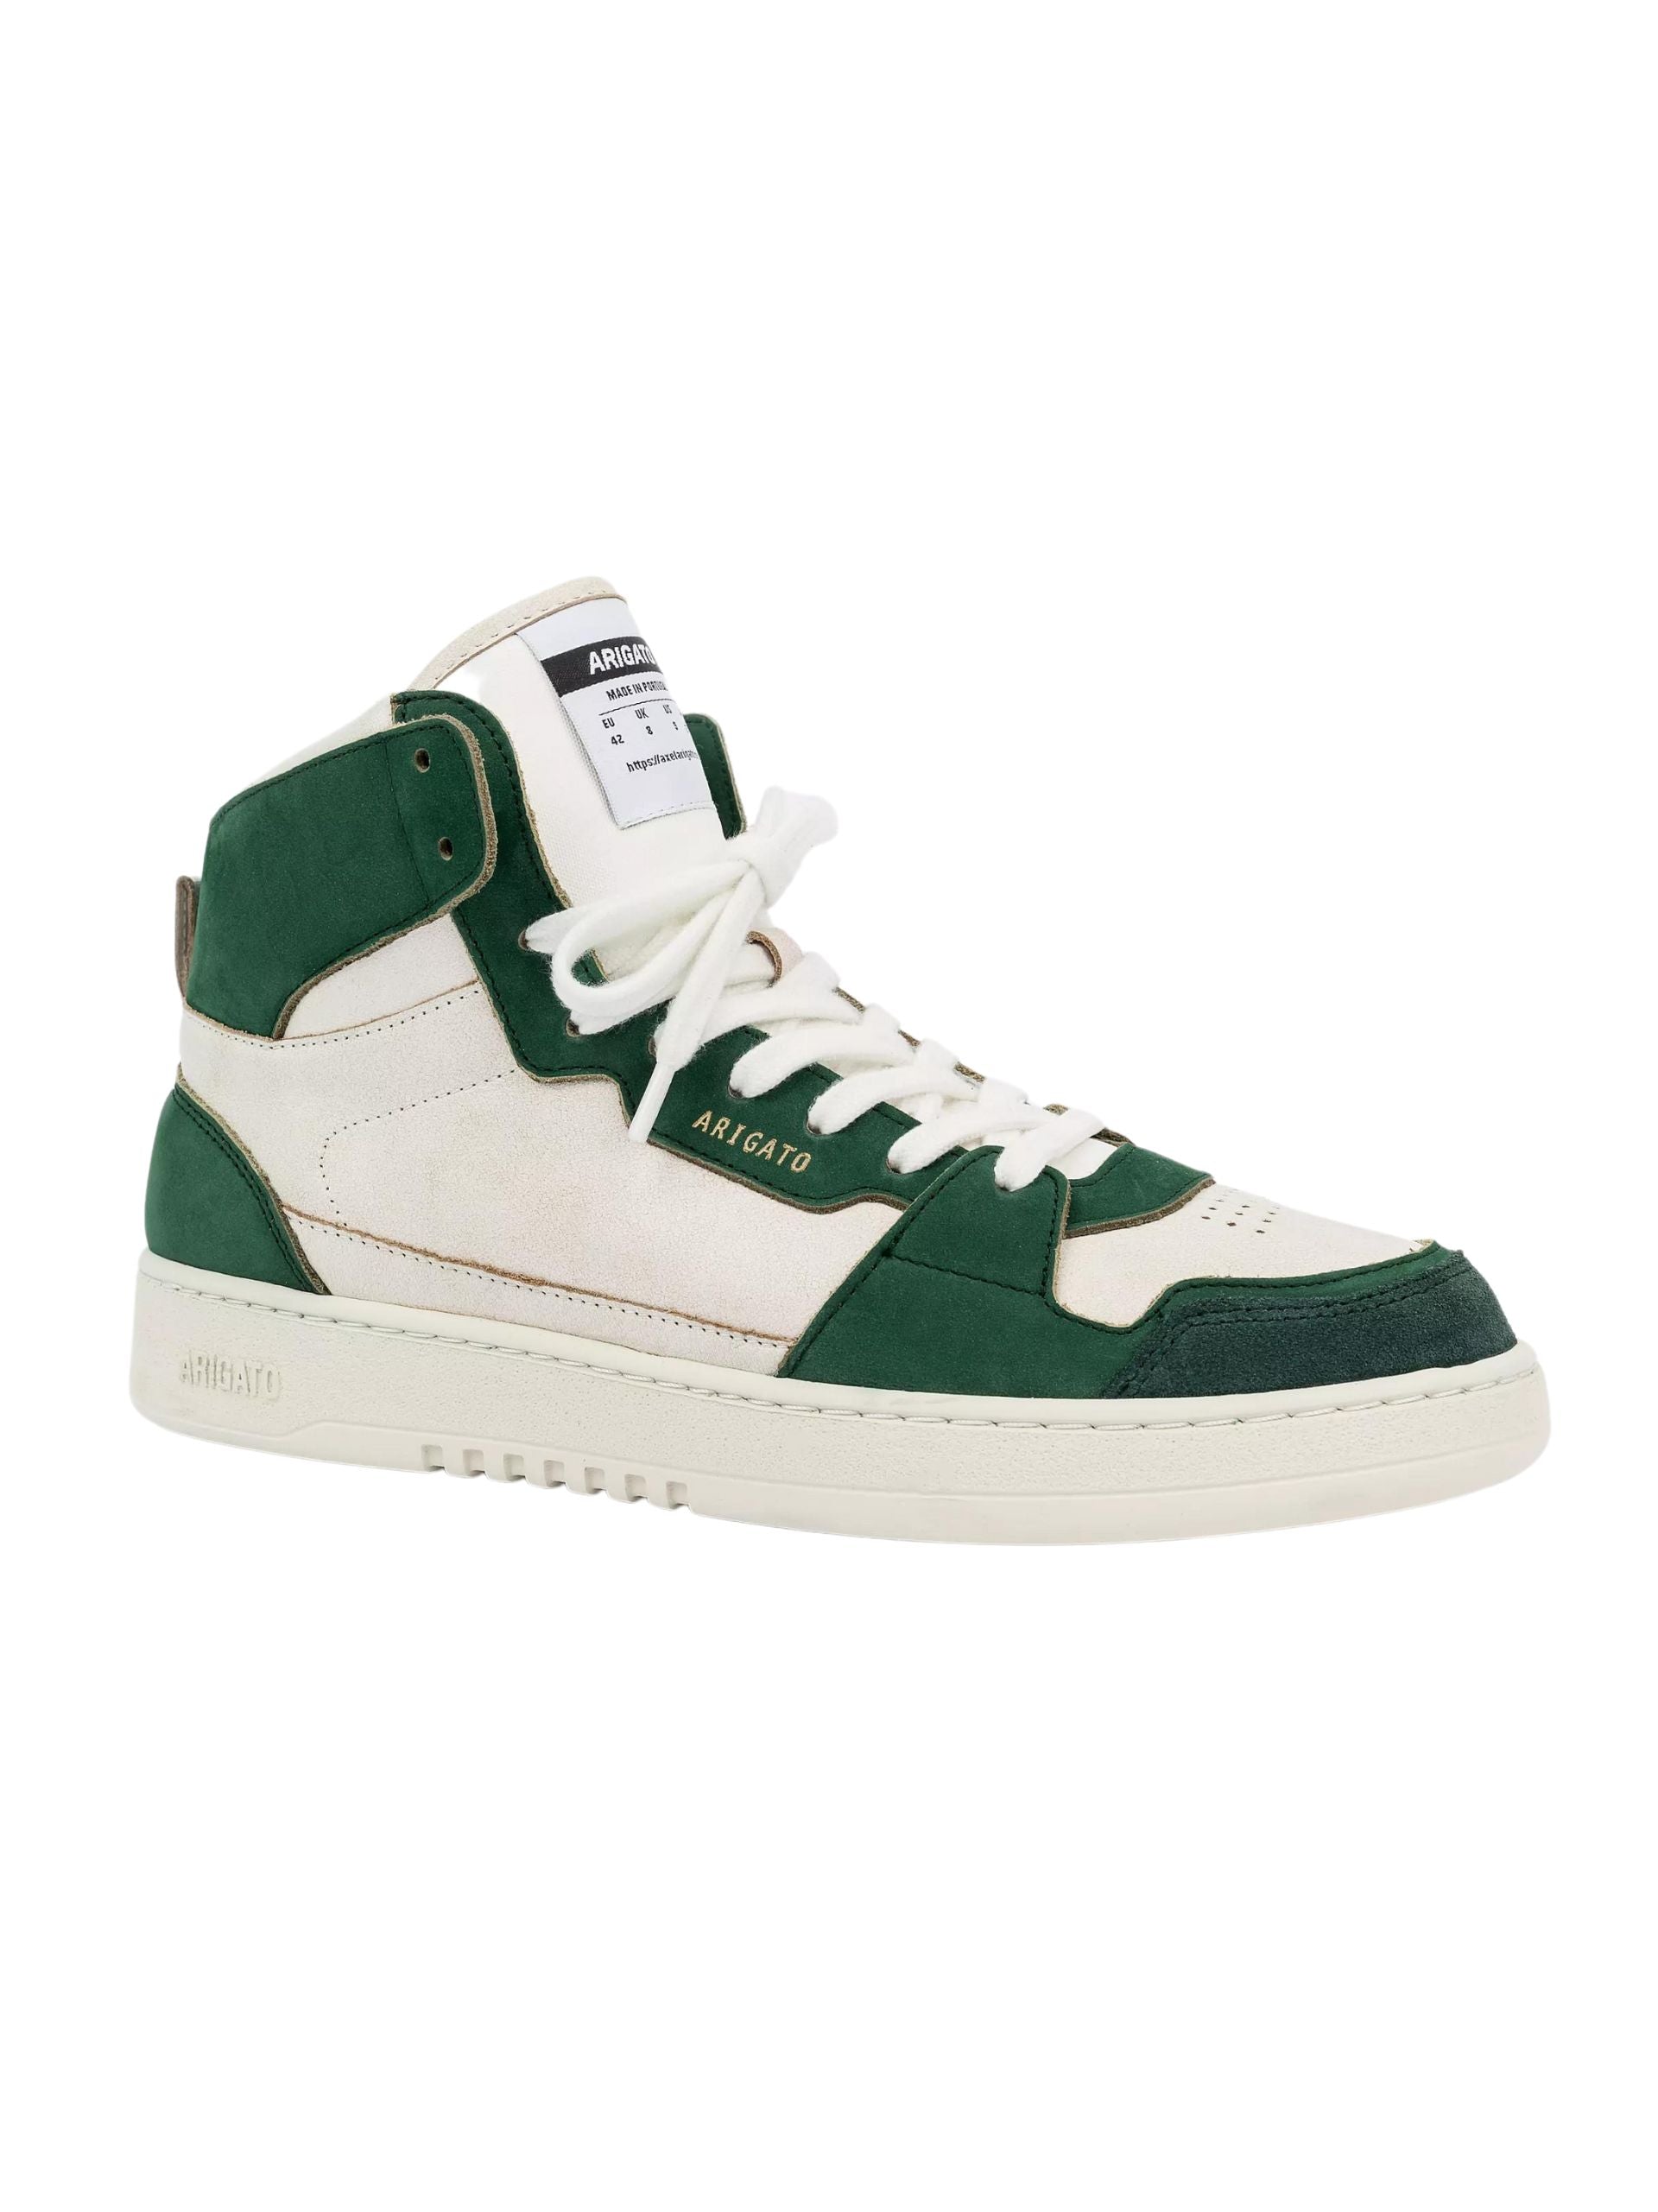 Dice Hi Sneaker / White & Kale Green Womens Axel Arigato 